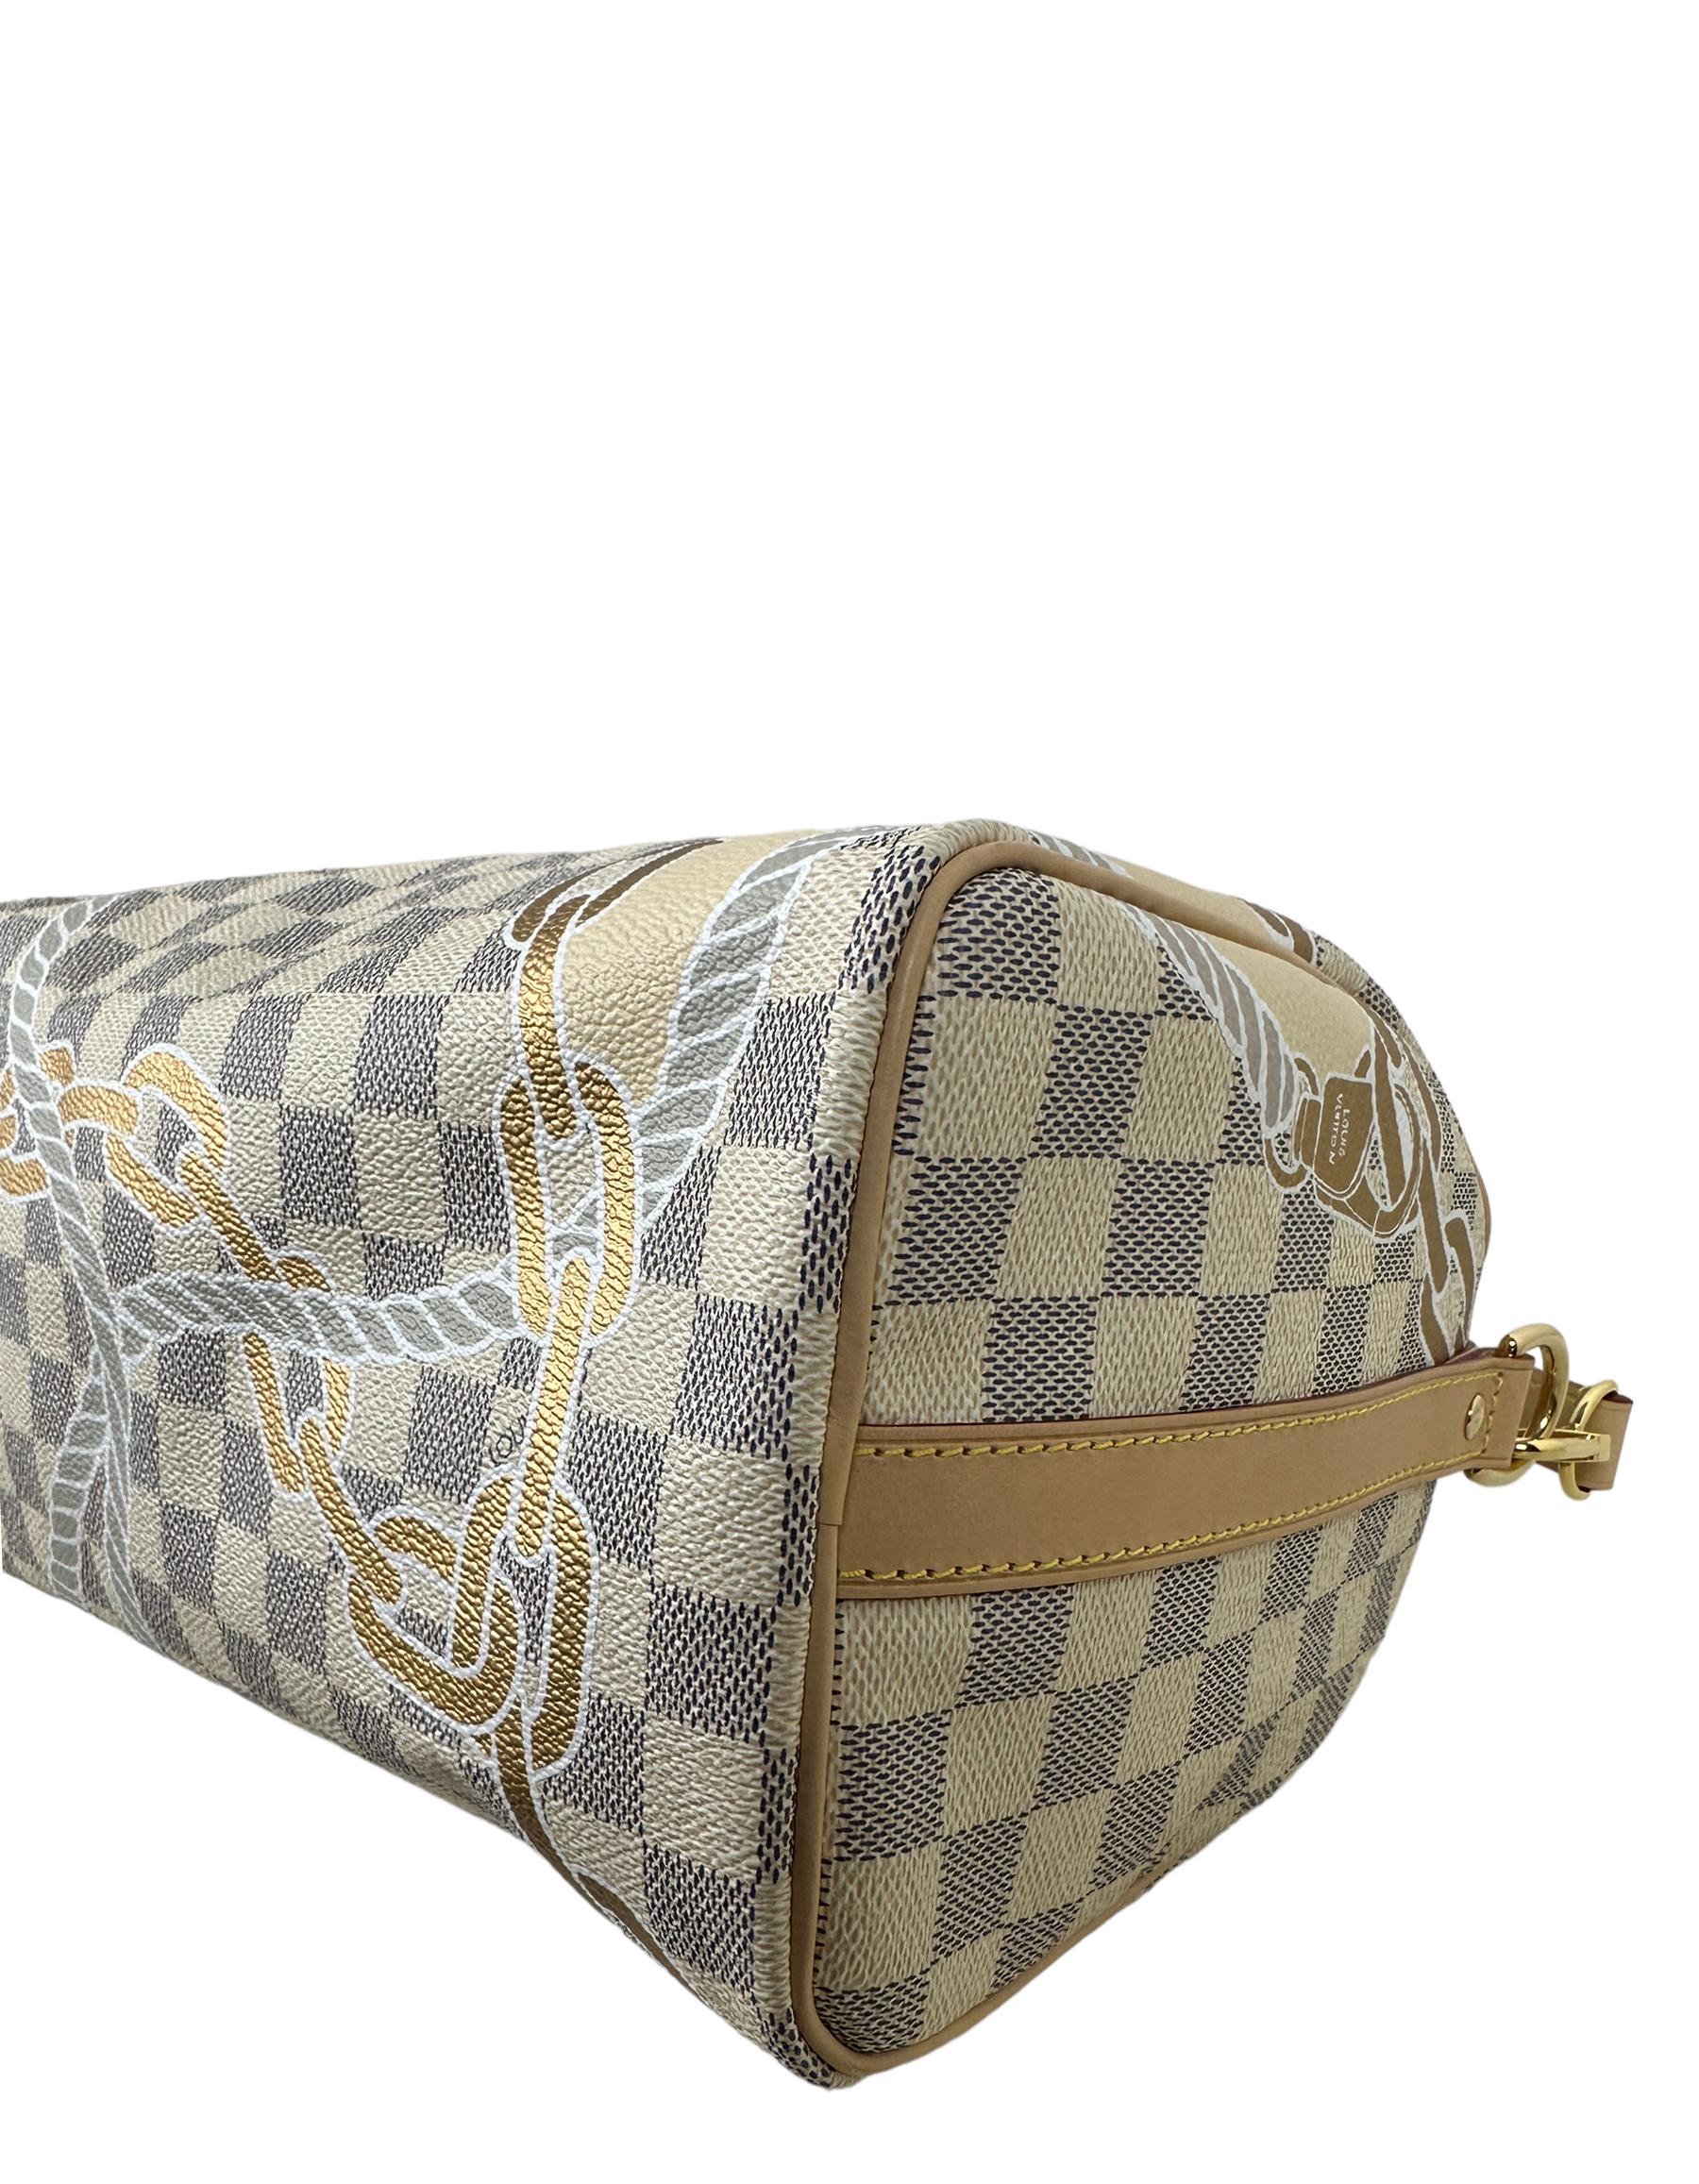 Women's Louis Vuitton Limited Edition Nautical Damier Azur Speedy Bandouliere 25 Bag For Sale